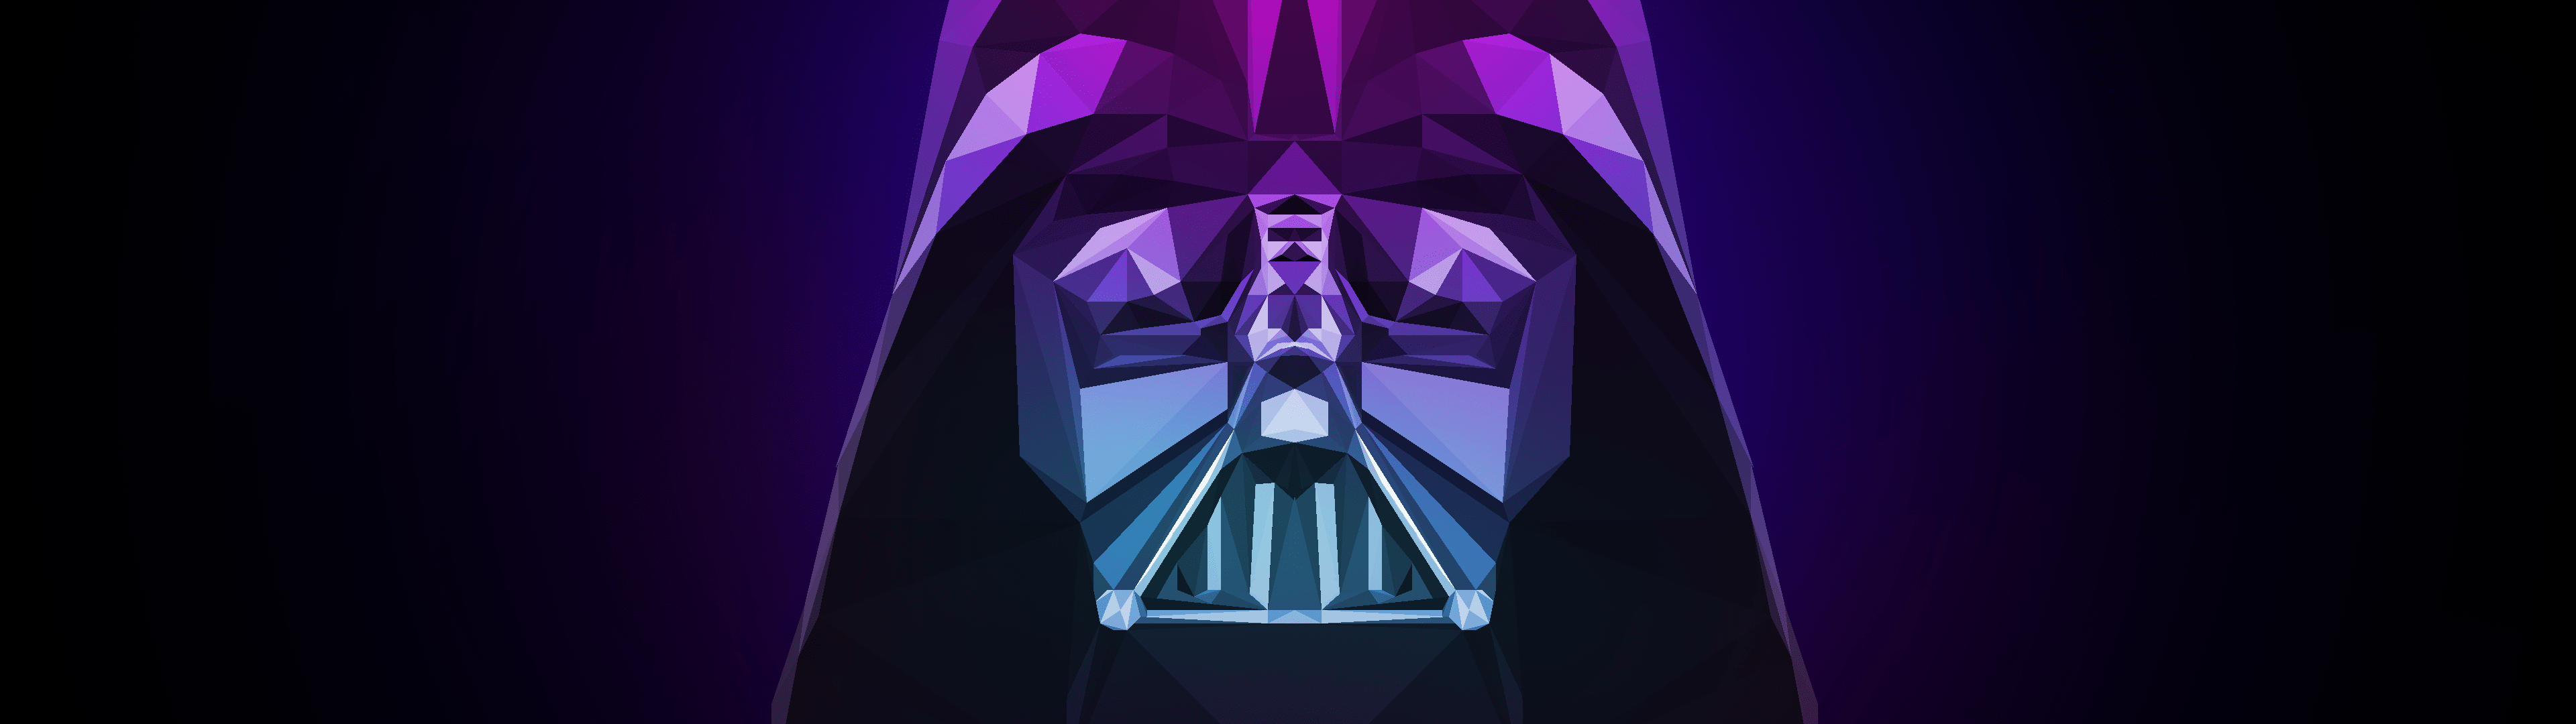 Darth Vader Wallpaper 4K, Low poly, Artwork, Graphics CGI